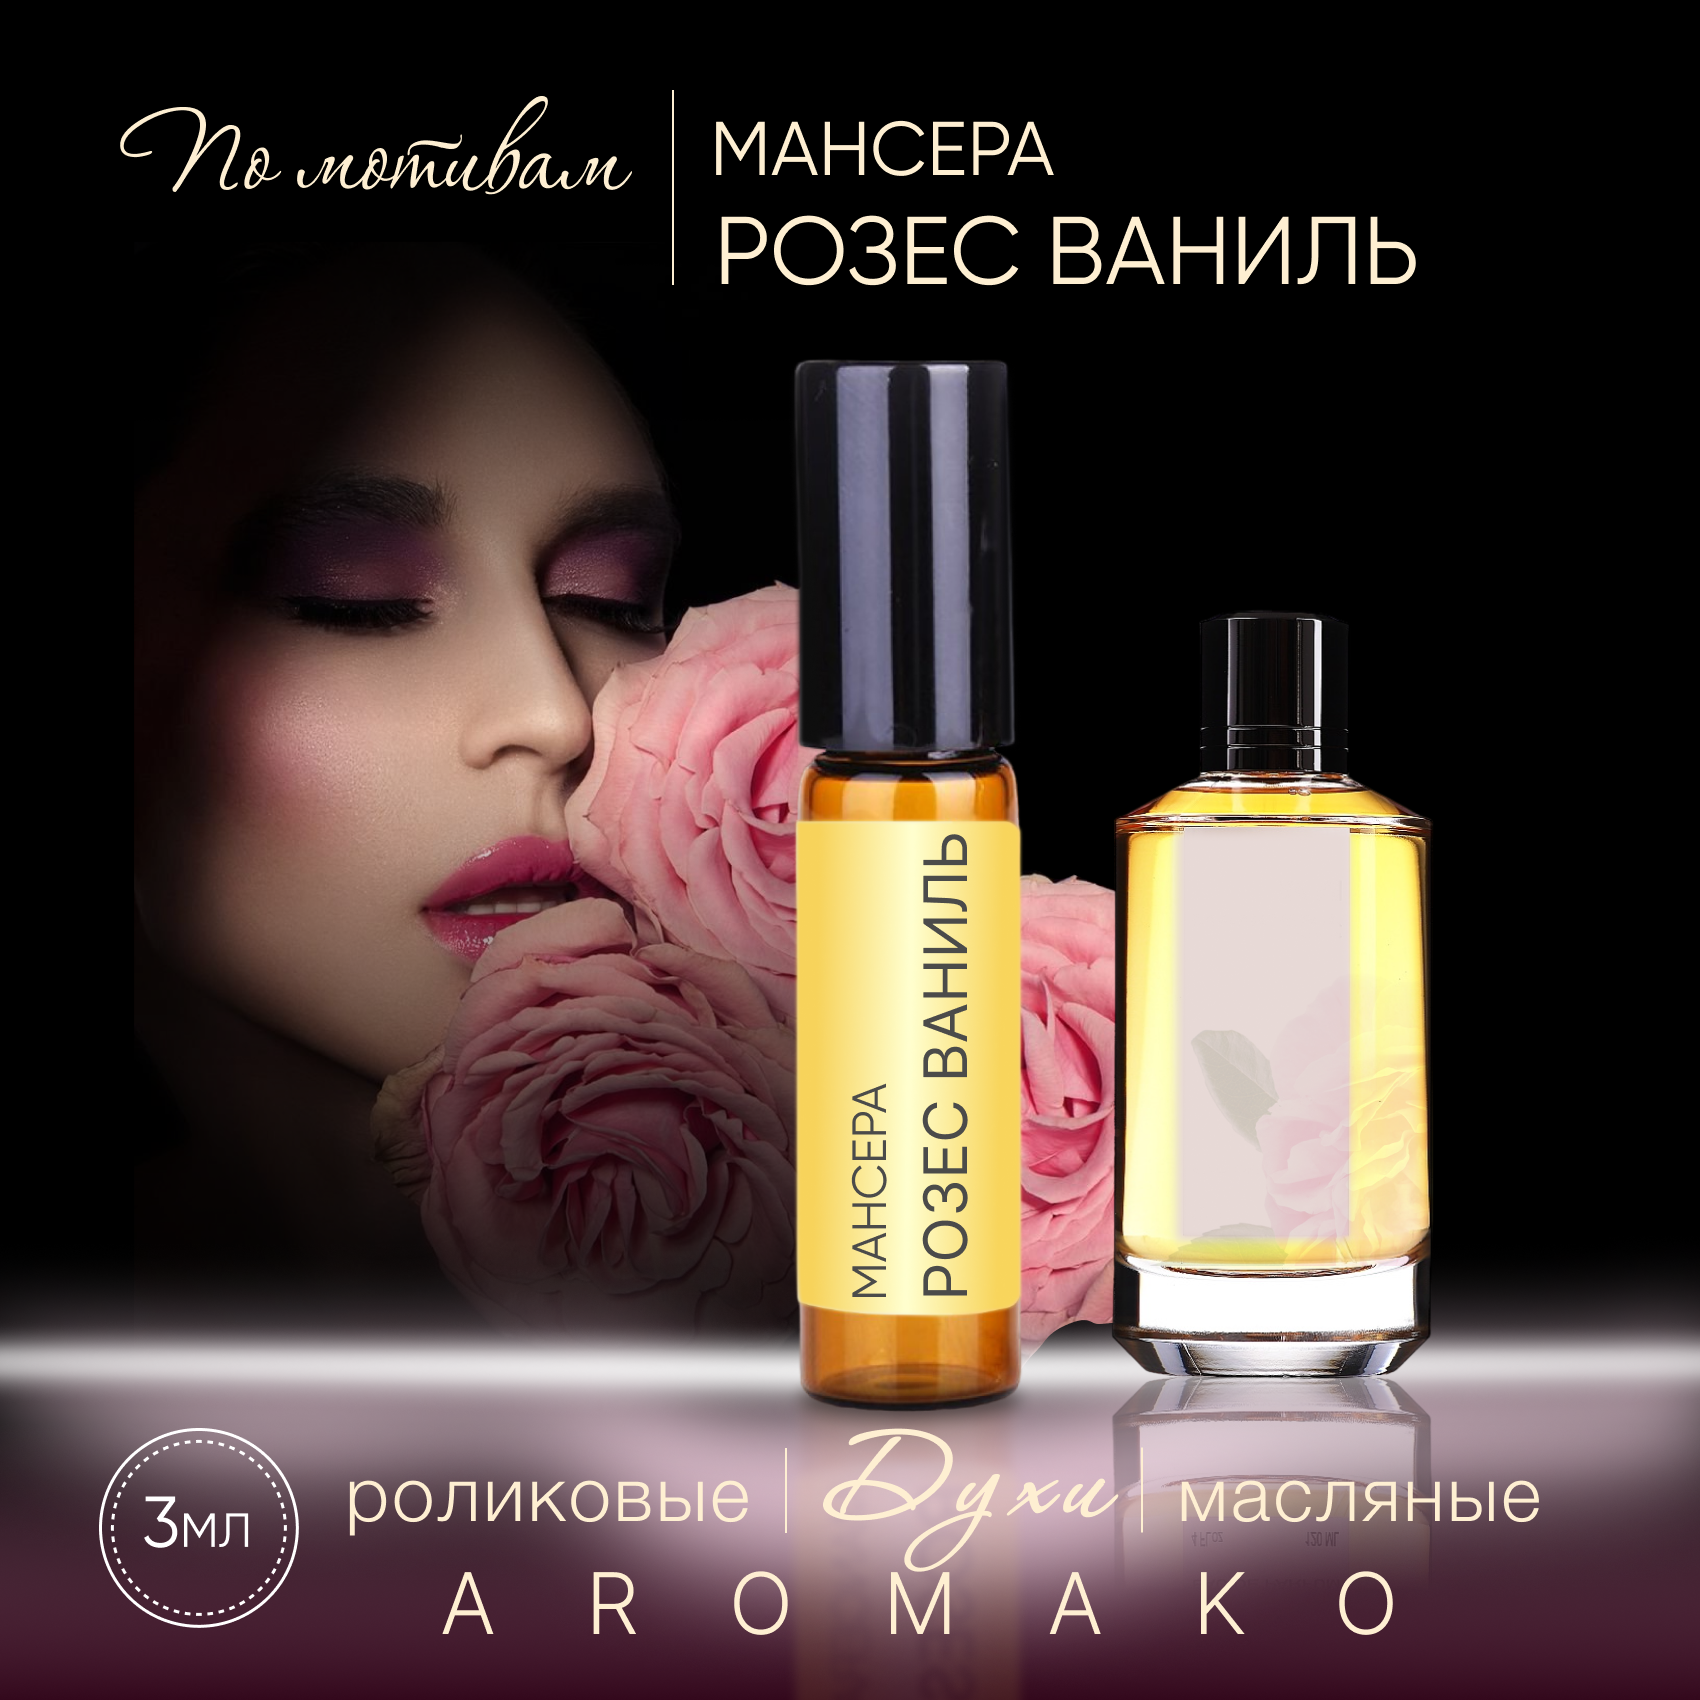 Духи масляные, парфюм - ролик по мотивам Mancera "Roses Vanille" 3 мл, AROMAKO